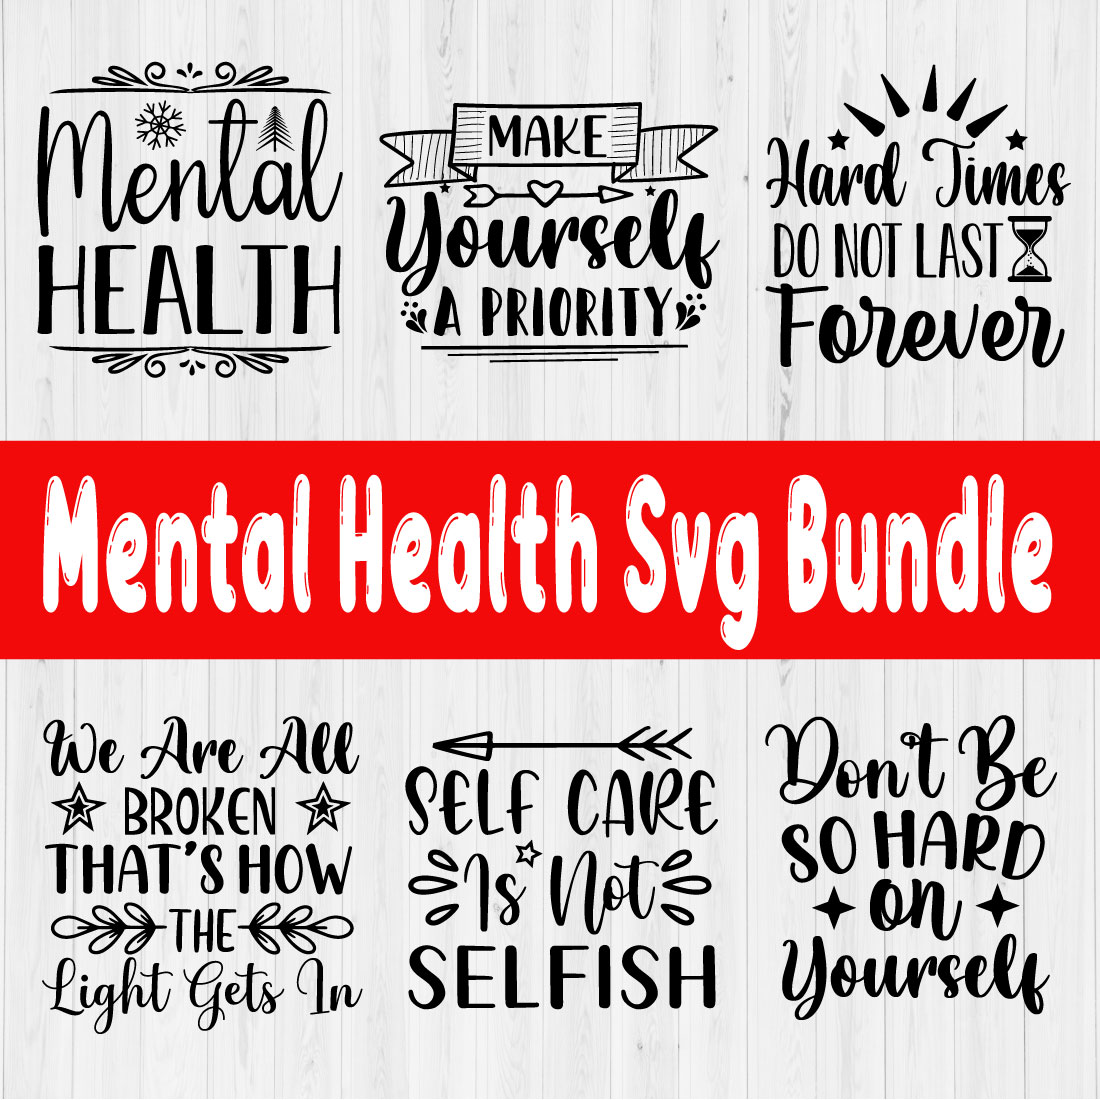 Mental Health Svg Bundle Vol1 preview image.